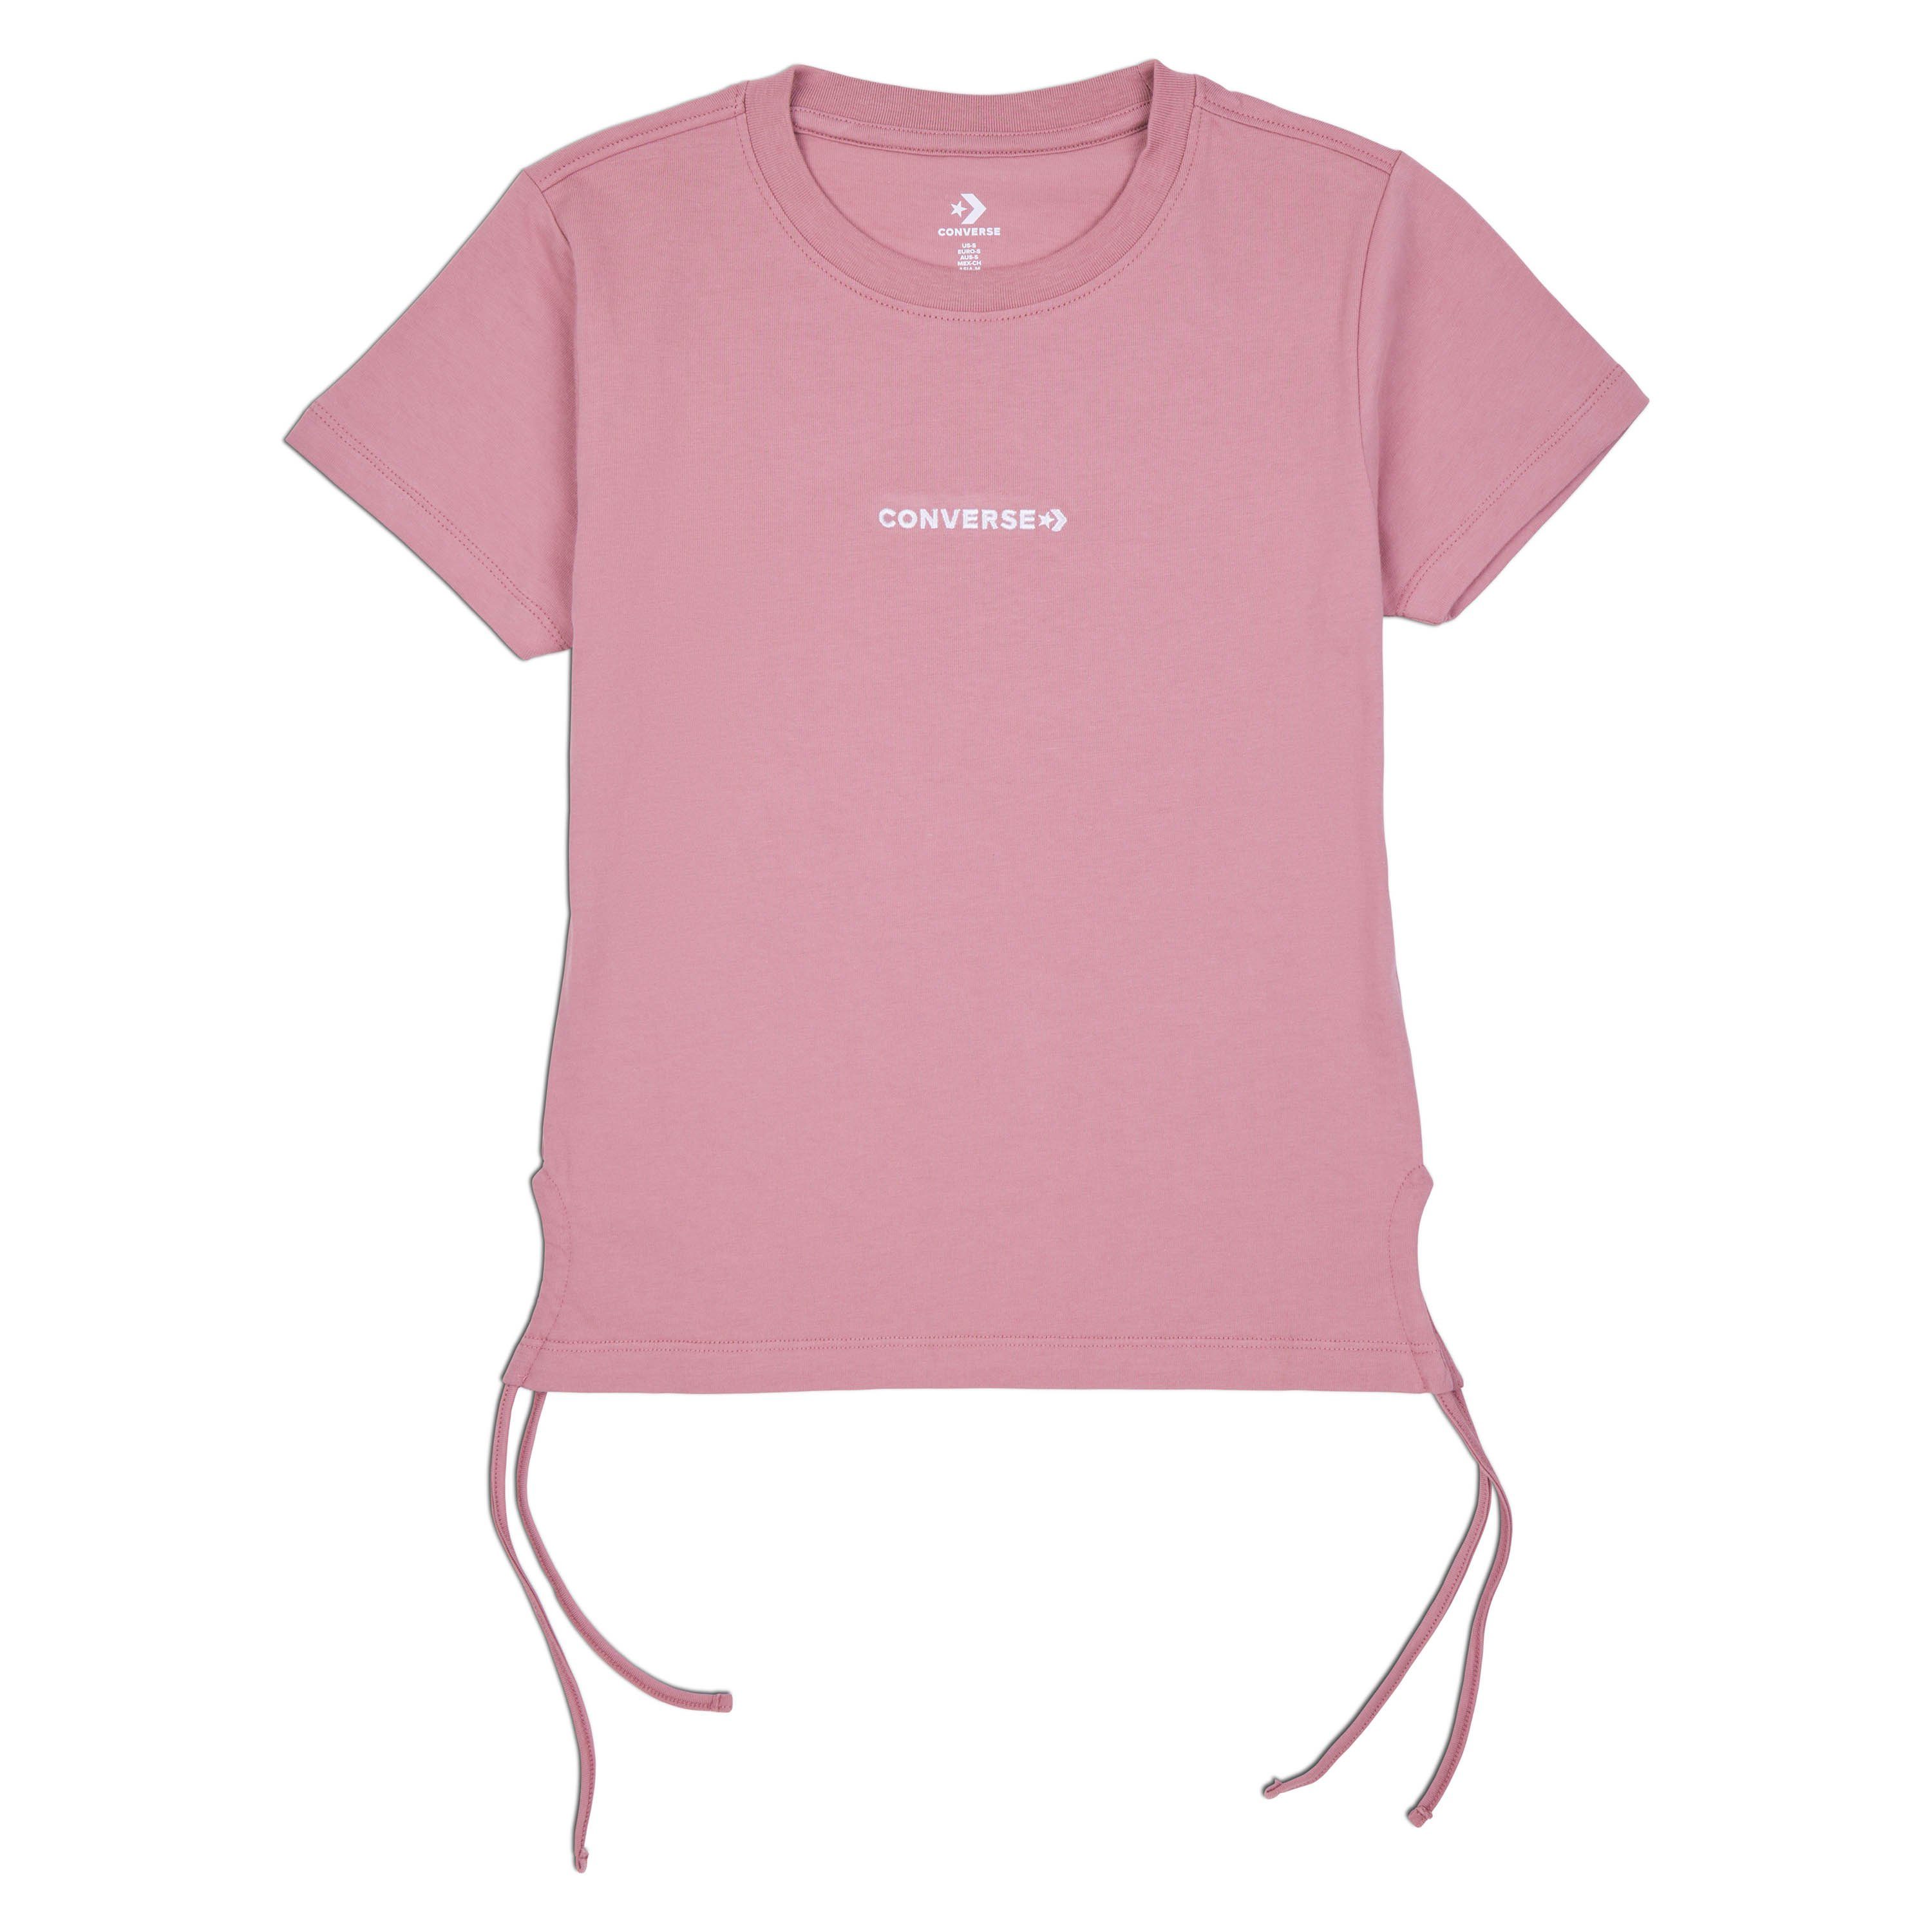 WORDMARK flamingo night NOVELTY Converse TOP T-Shirt FASHION